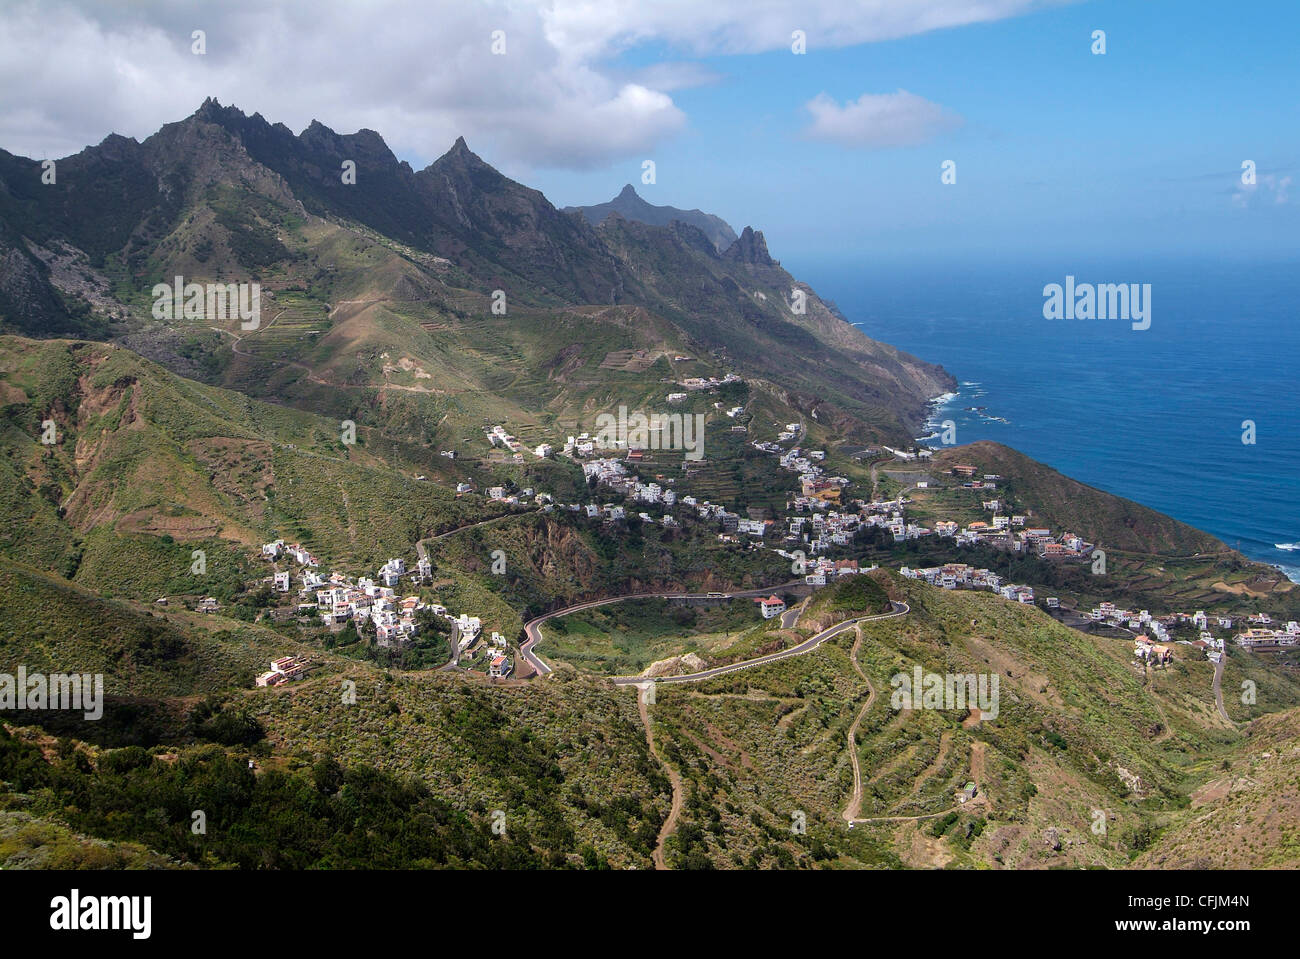 Les montagnes d'Anaga et l'almaciga, Tenerife, Canaries, Espagne, Europe, Atlantique Banque D'Images